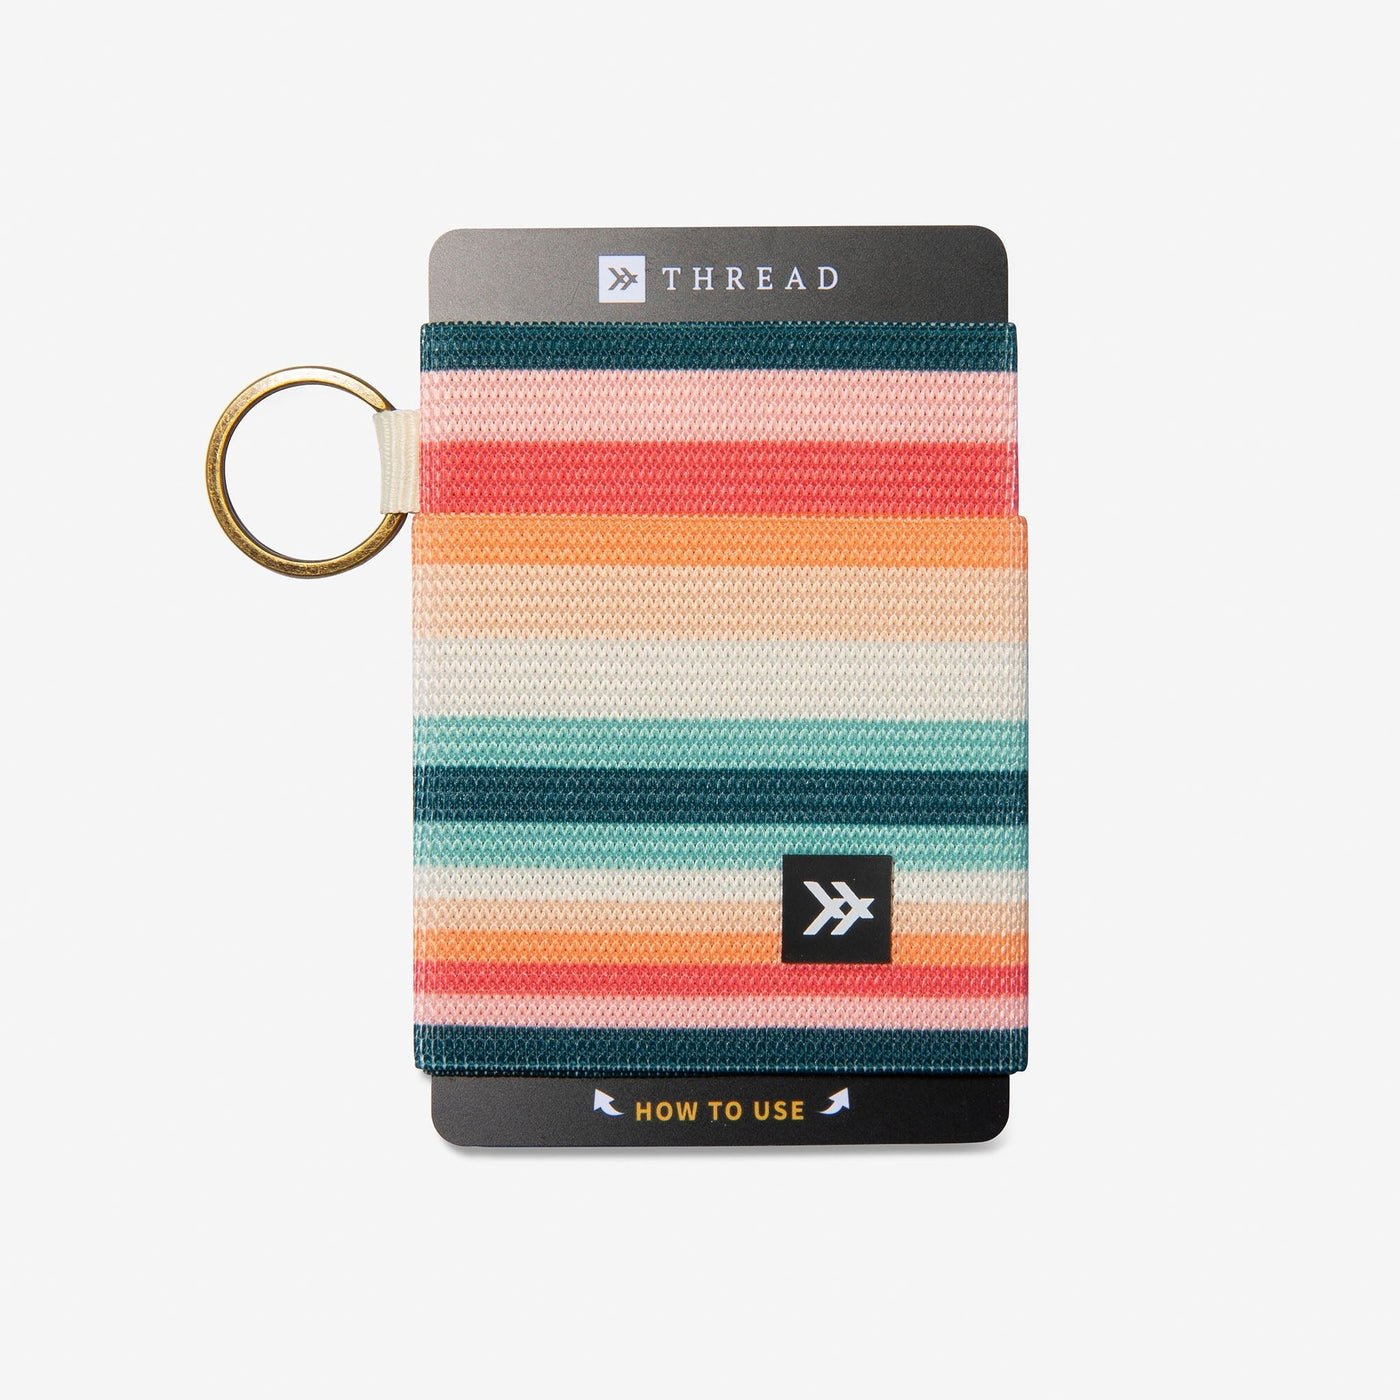 Jewel-tone striped elastic wallet